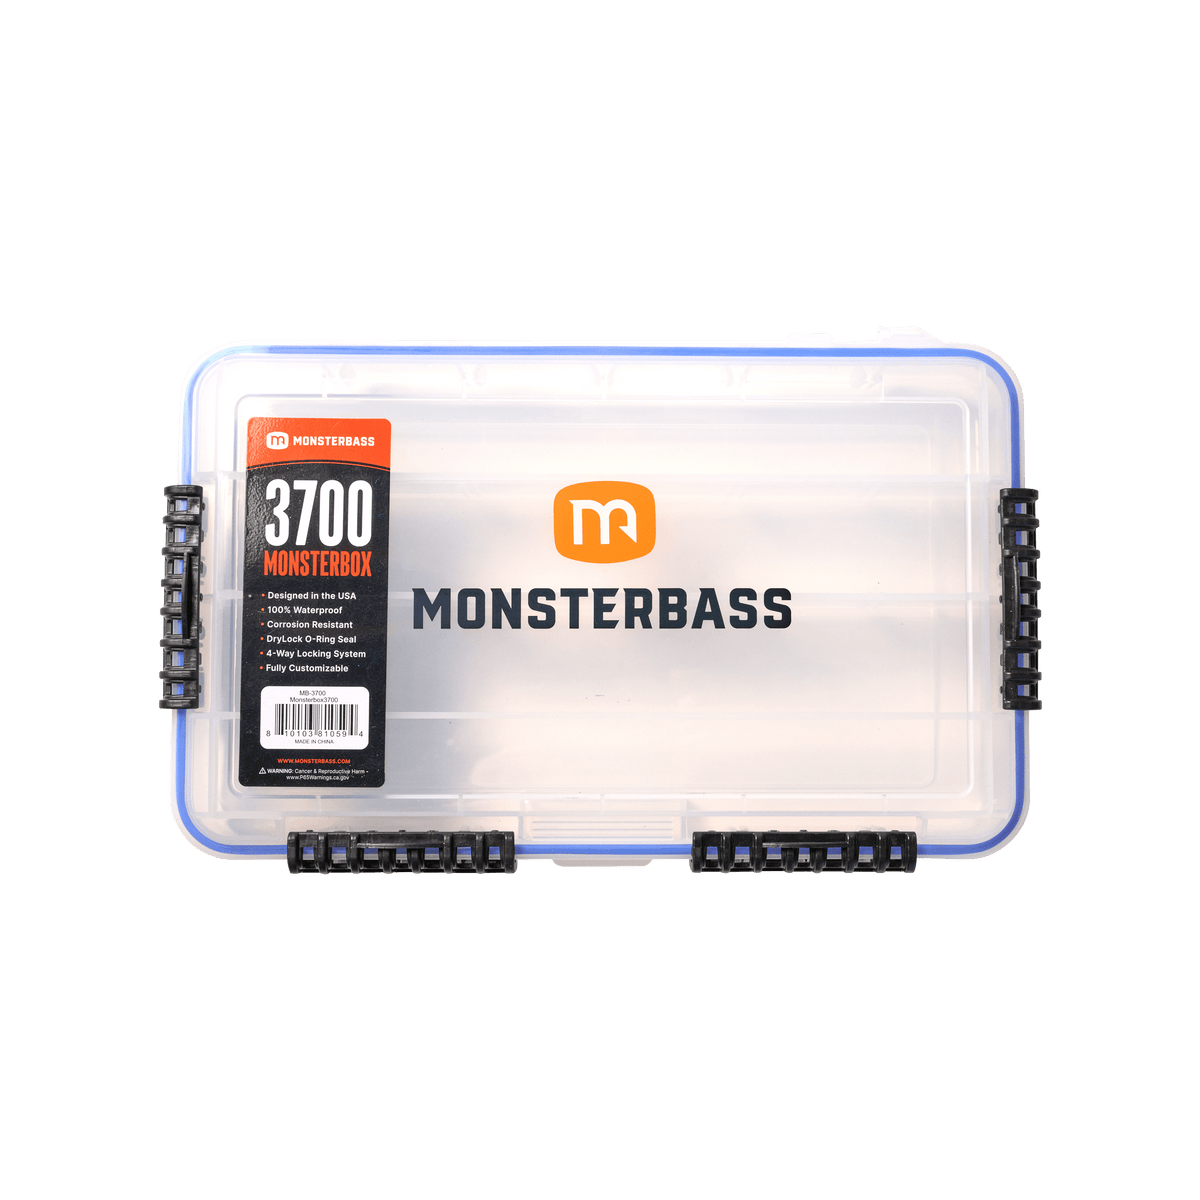 Monsterbox 3700 – MONSTERBASS